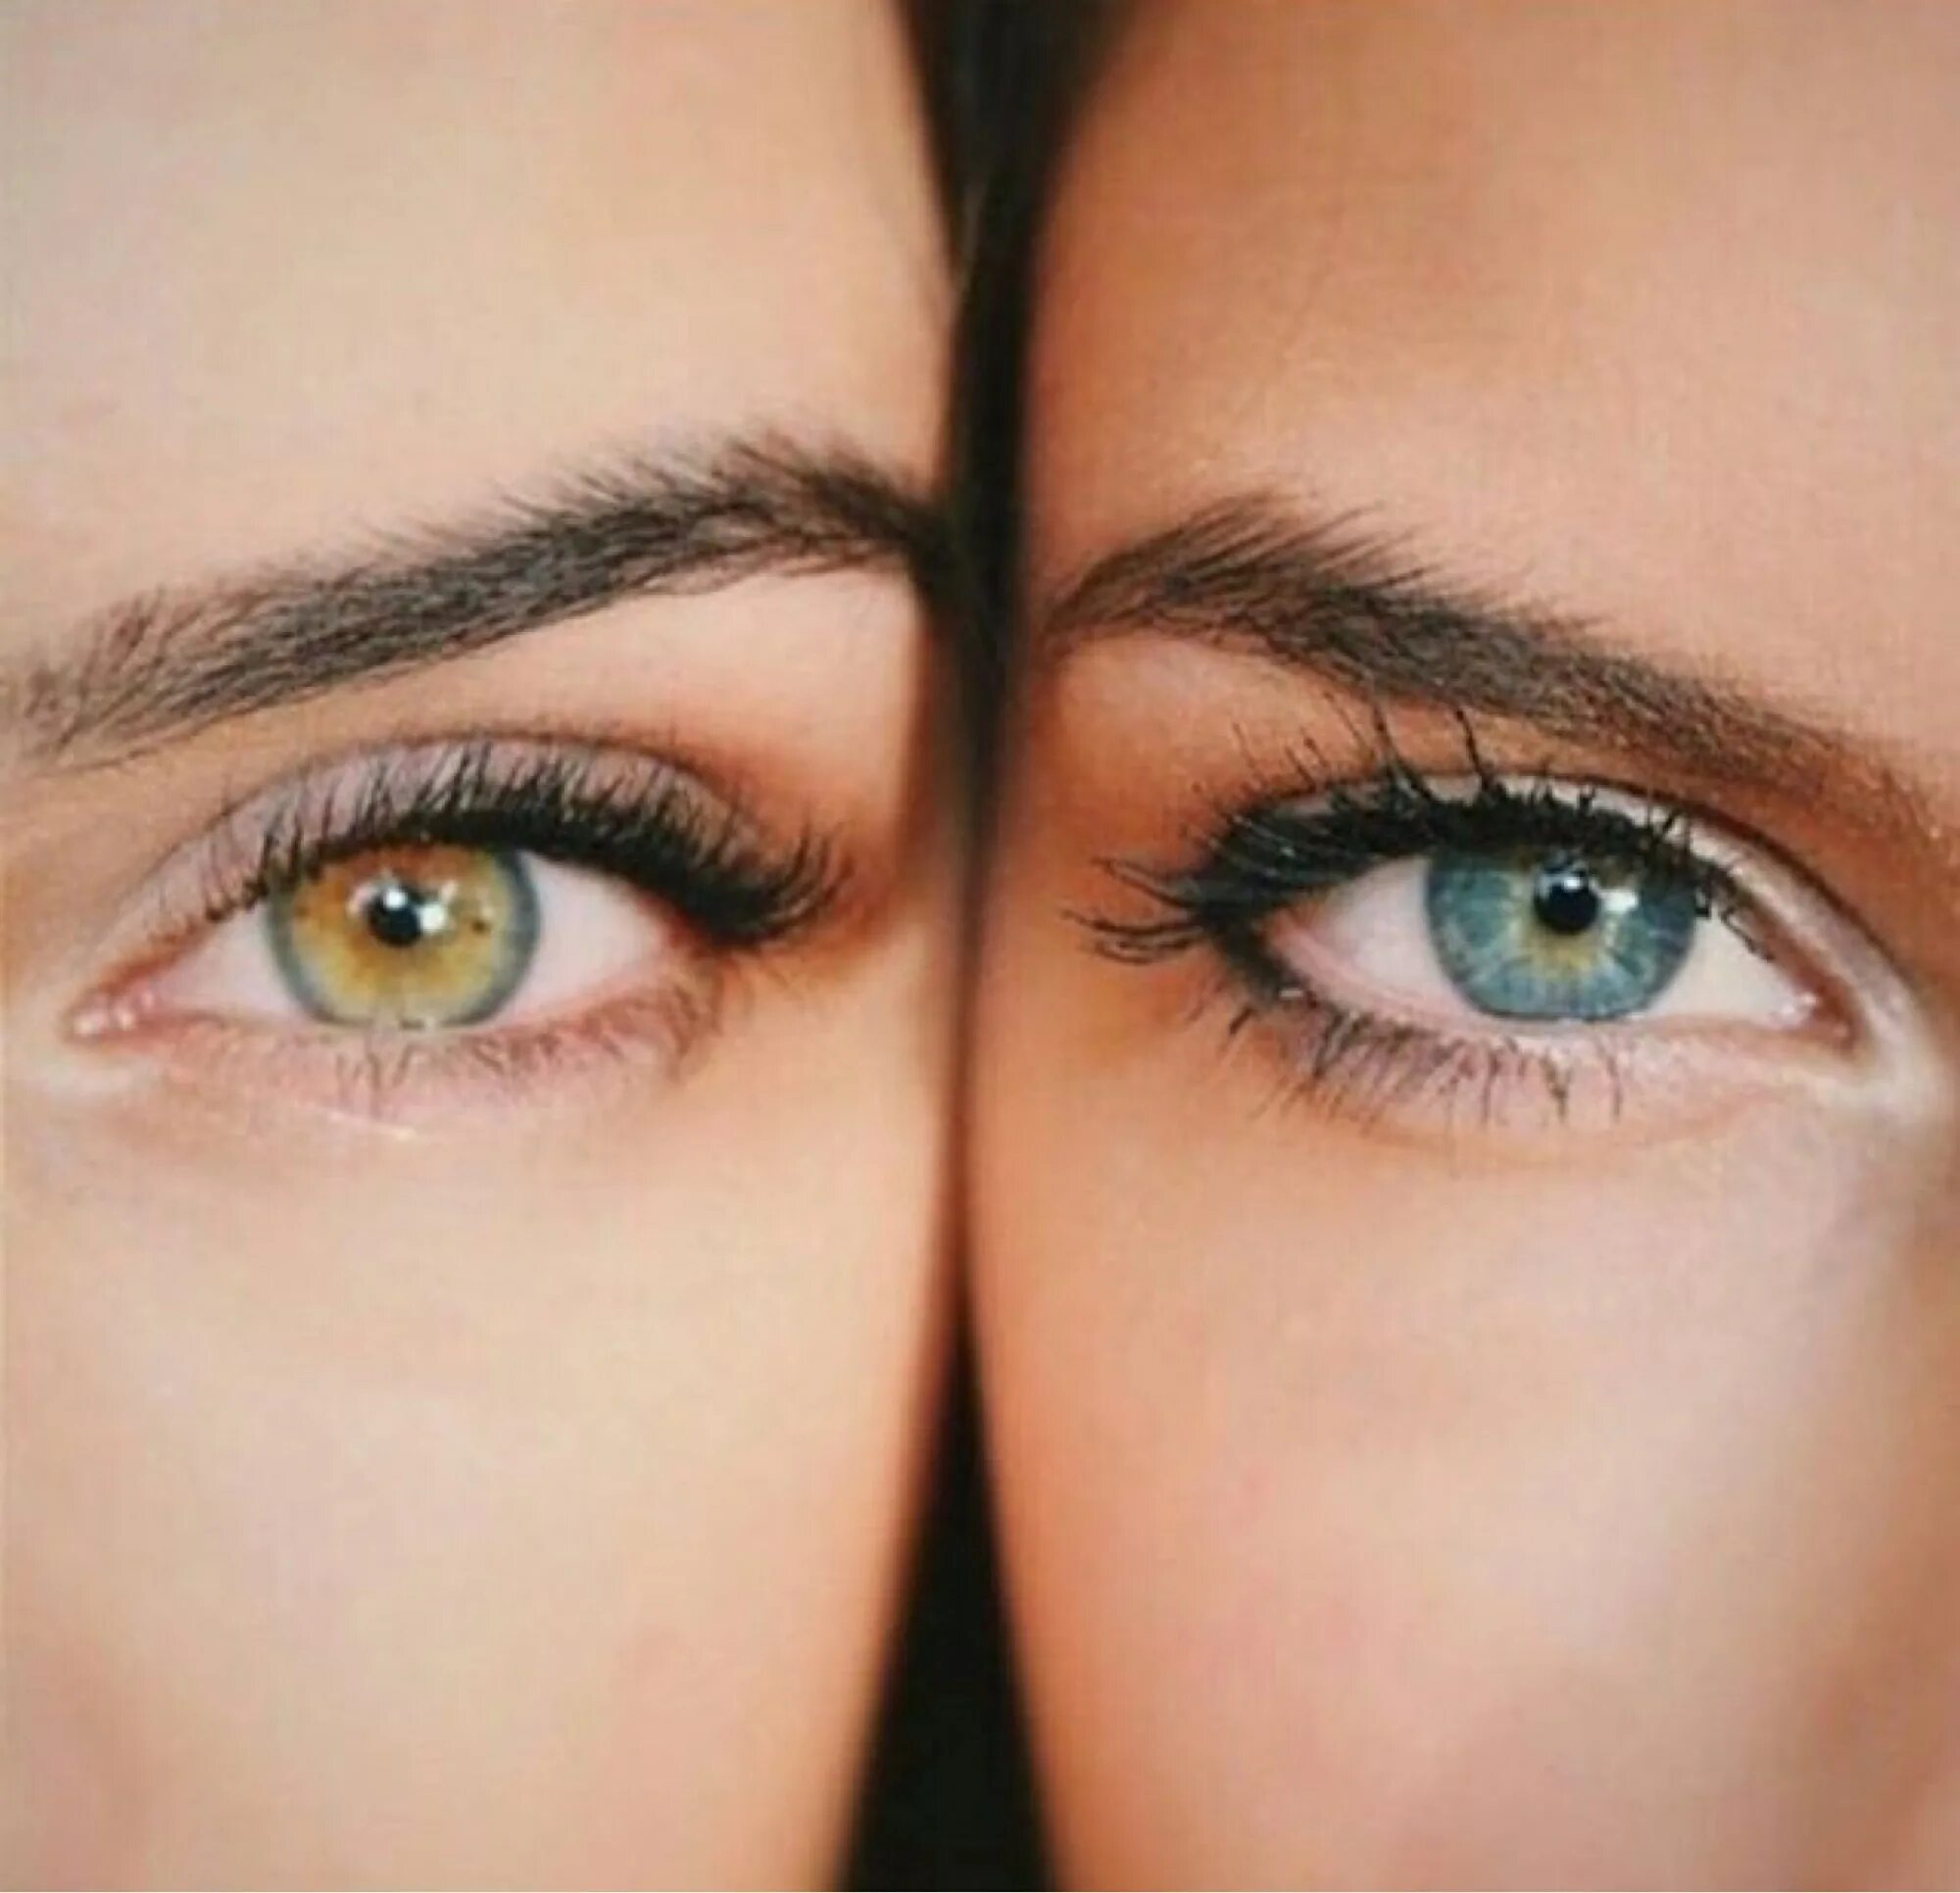 Двое глаза. Два глаза. Два глаза человека. Пара глаз. Красивые два глаза.